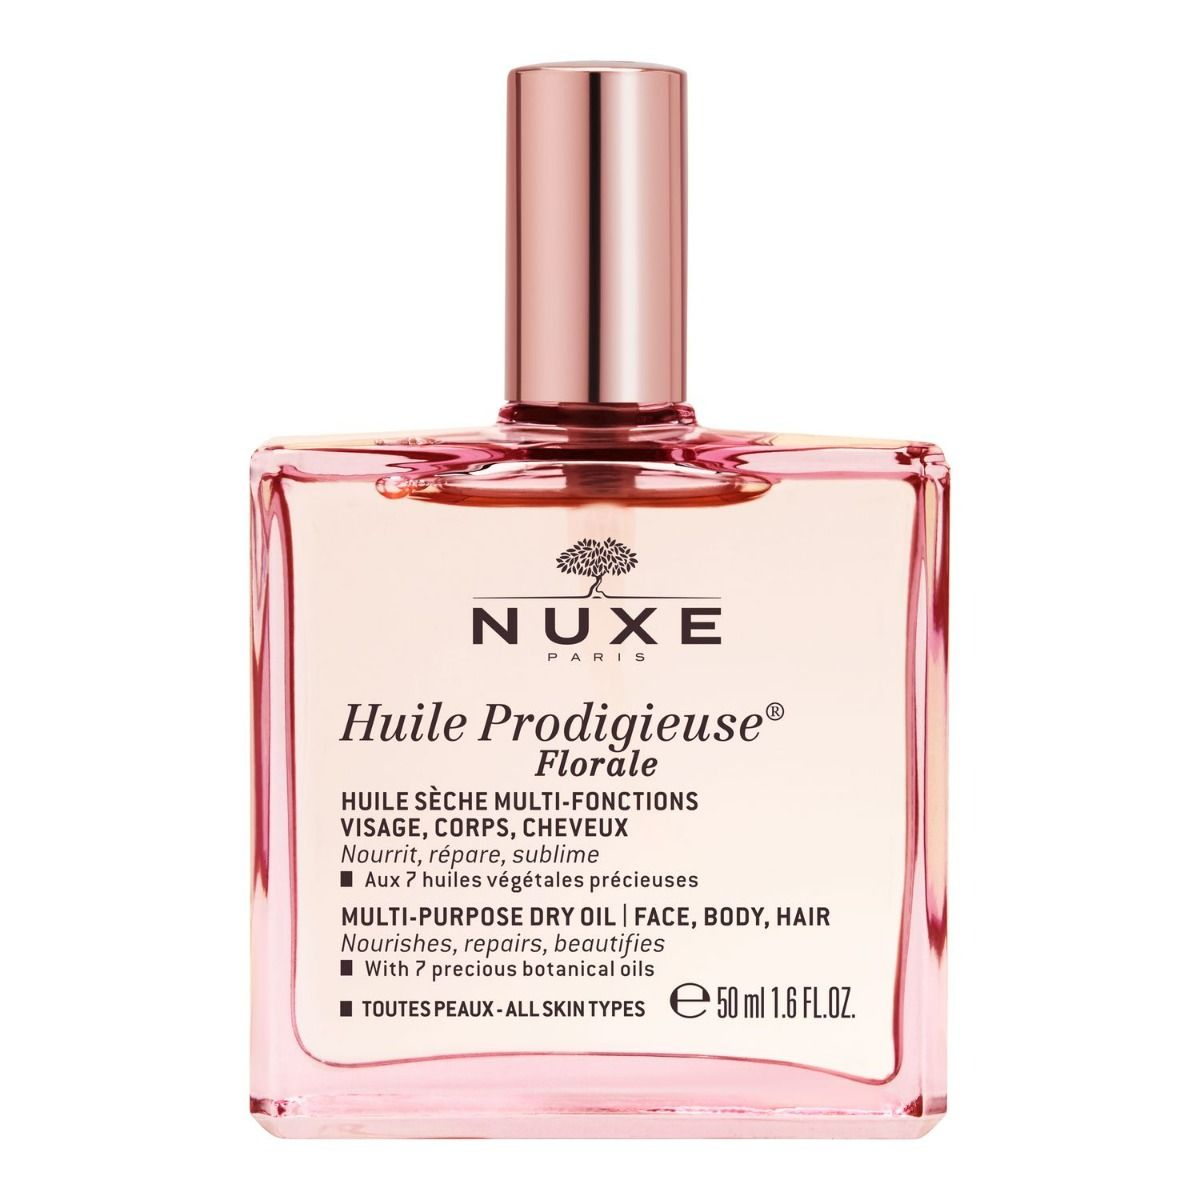 Nuxe Huile Prodigieuse Florale масло для лица, тела и волос, 50 ml nuxe мерцающее сухое масло для лица тела и волос huile or 100 мл nuxe prodigieuse